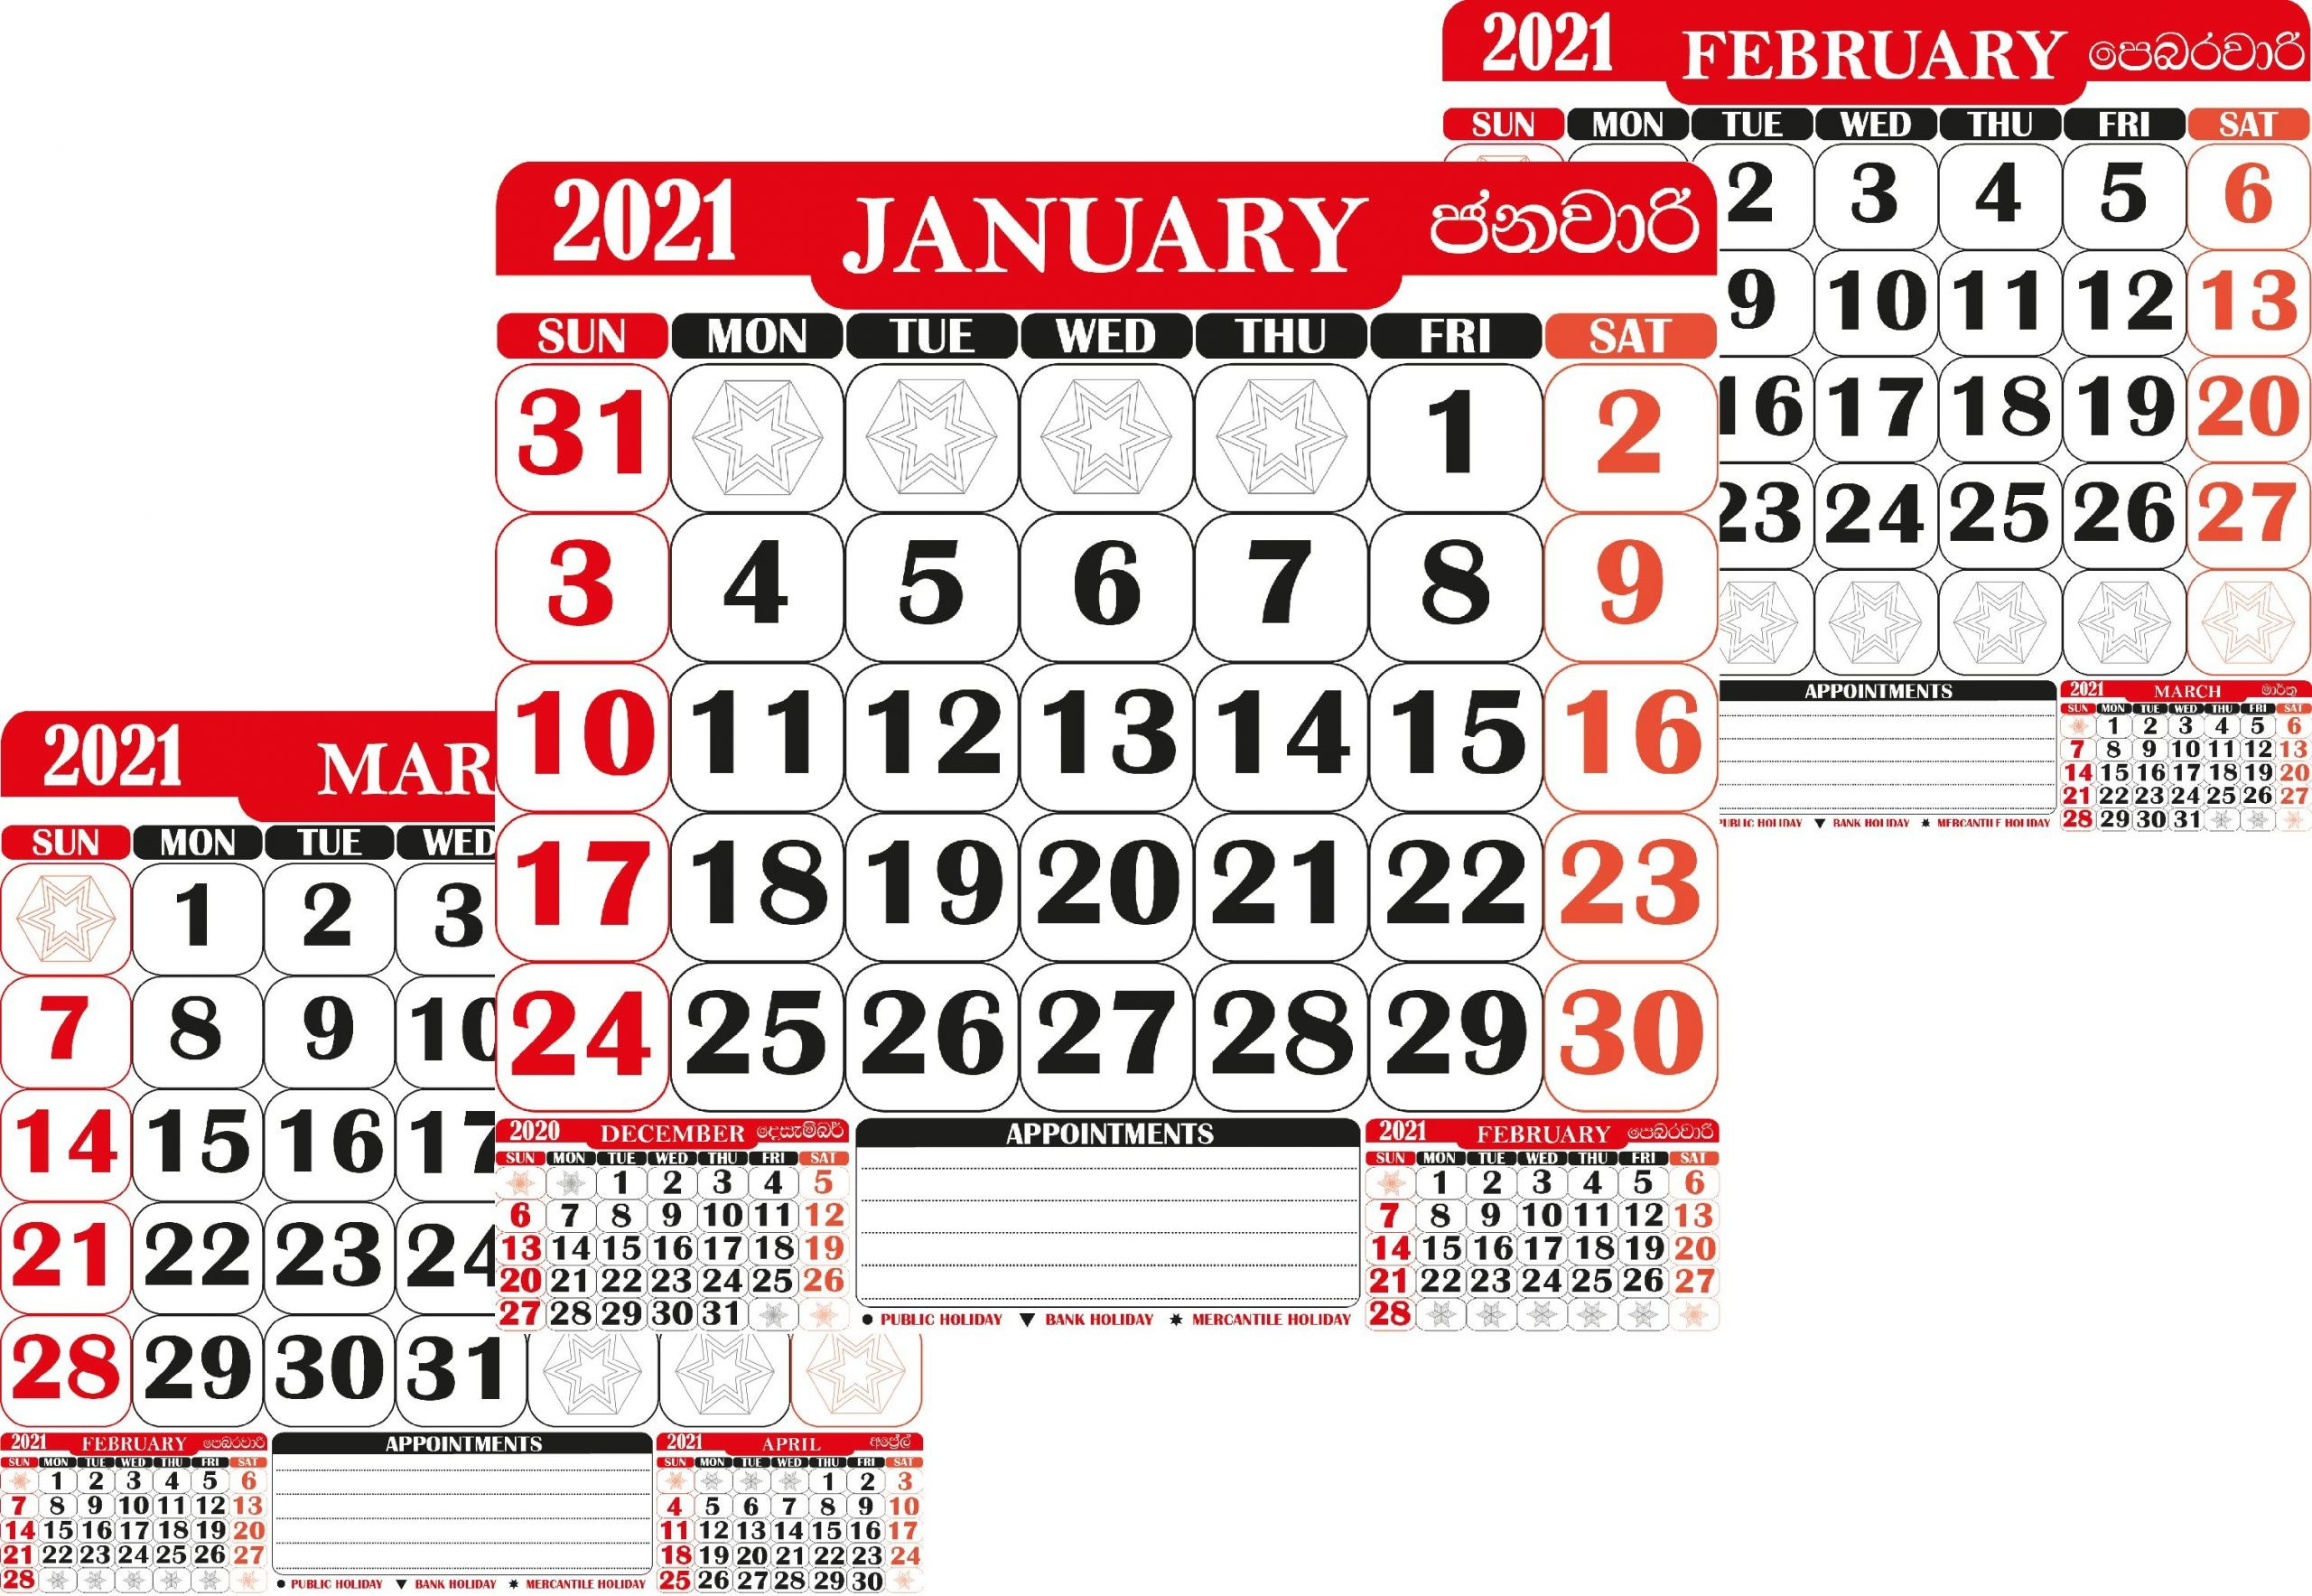 2021 Mercantile Holidays - Example Calendar Printable-Mercentile Holidays In Sri Lanka 2021